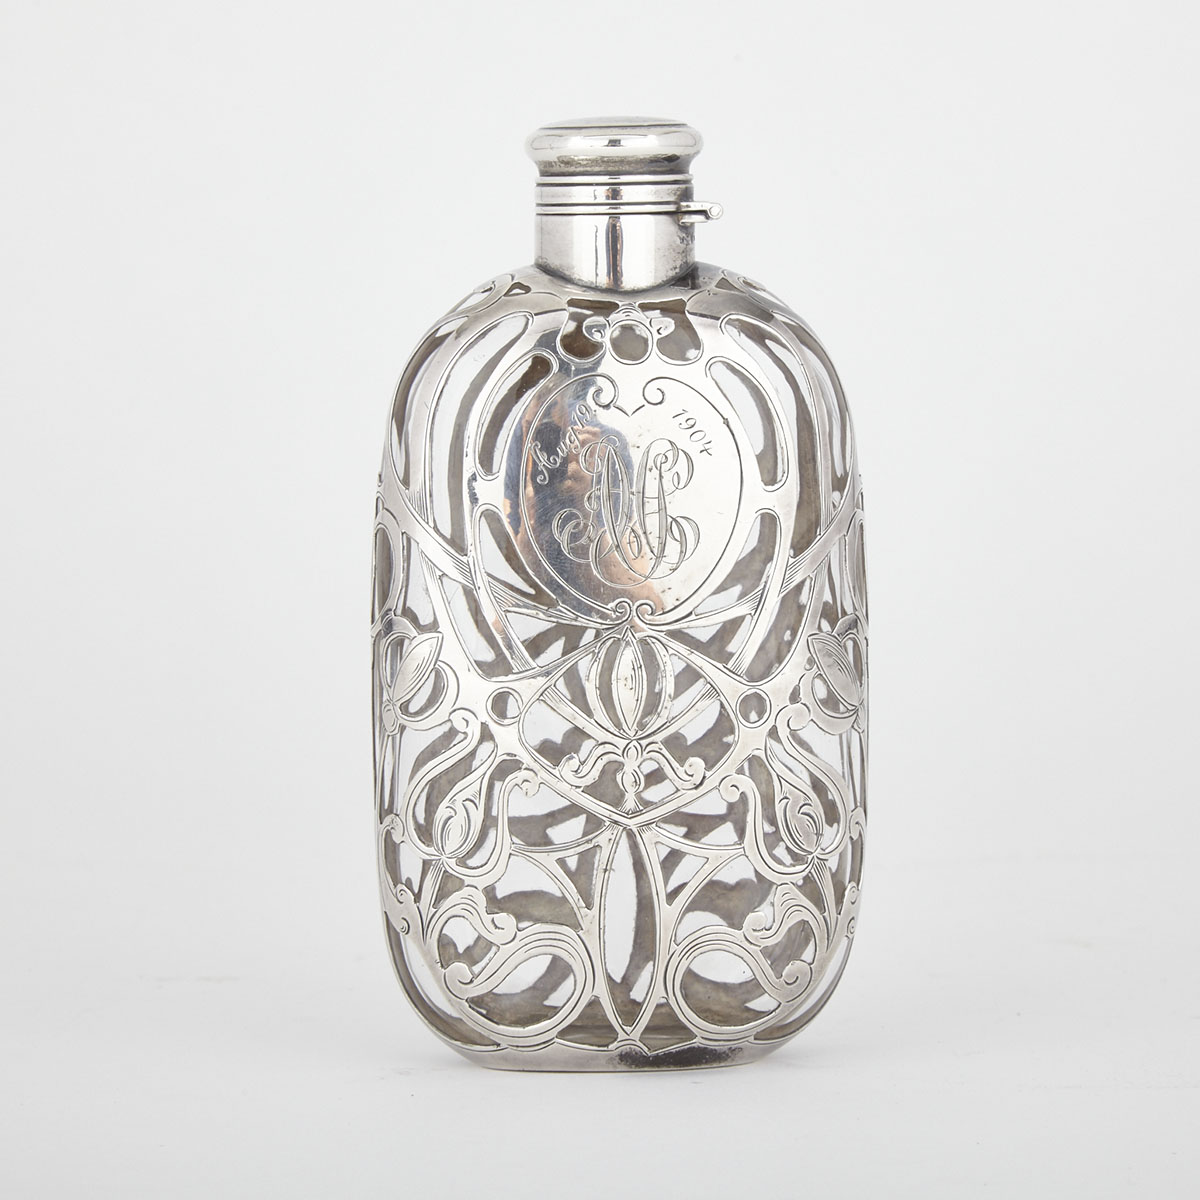 American Silver Overlaid Glass Spirit Flask, Gorham Mfg. Co., Providence, R.I., c.1900